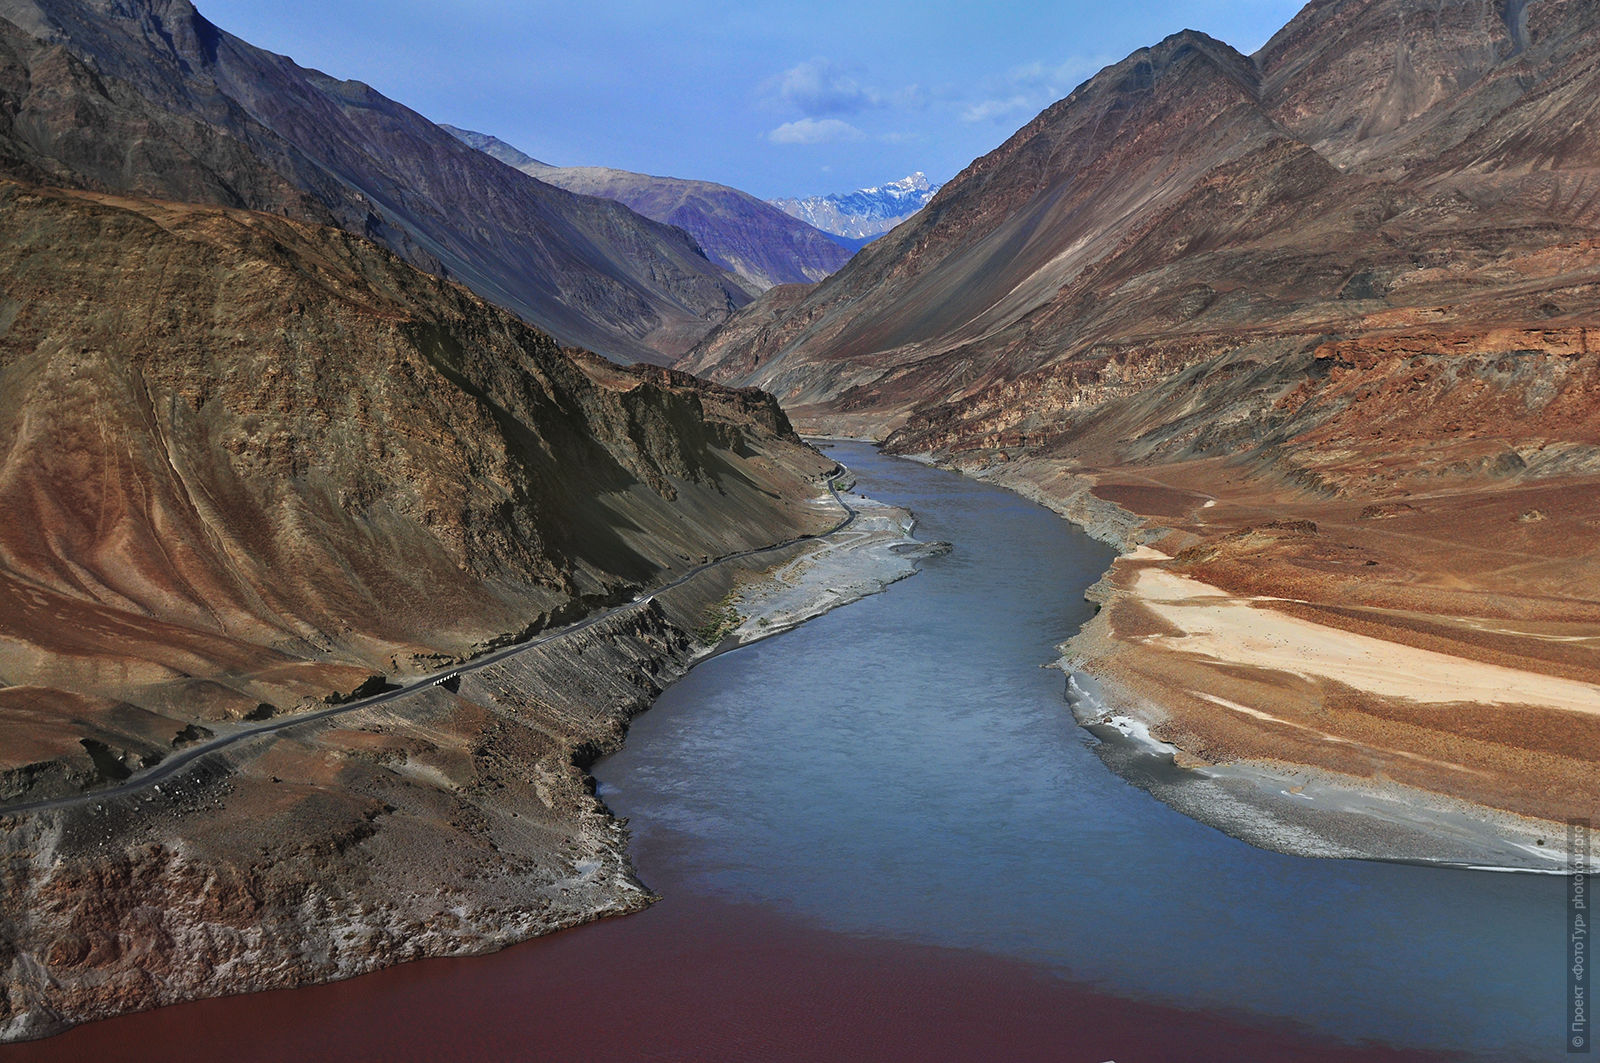 The confluence of the Indus and Zanskar rivers, Ladakh women’s tour, August 31 - September 14, 2019.